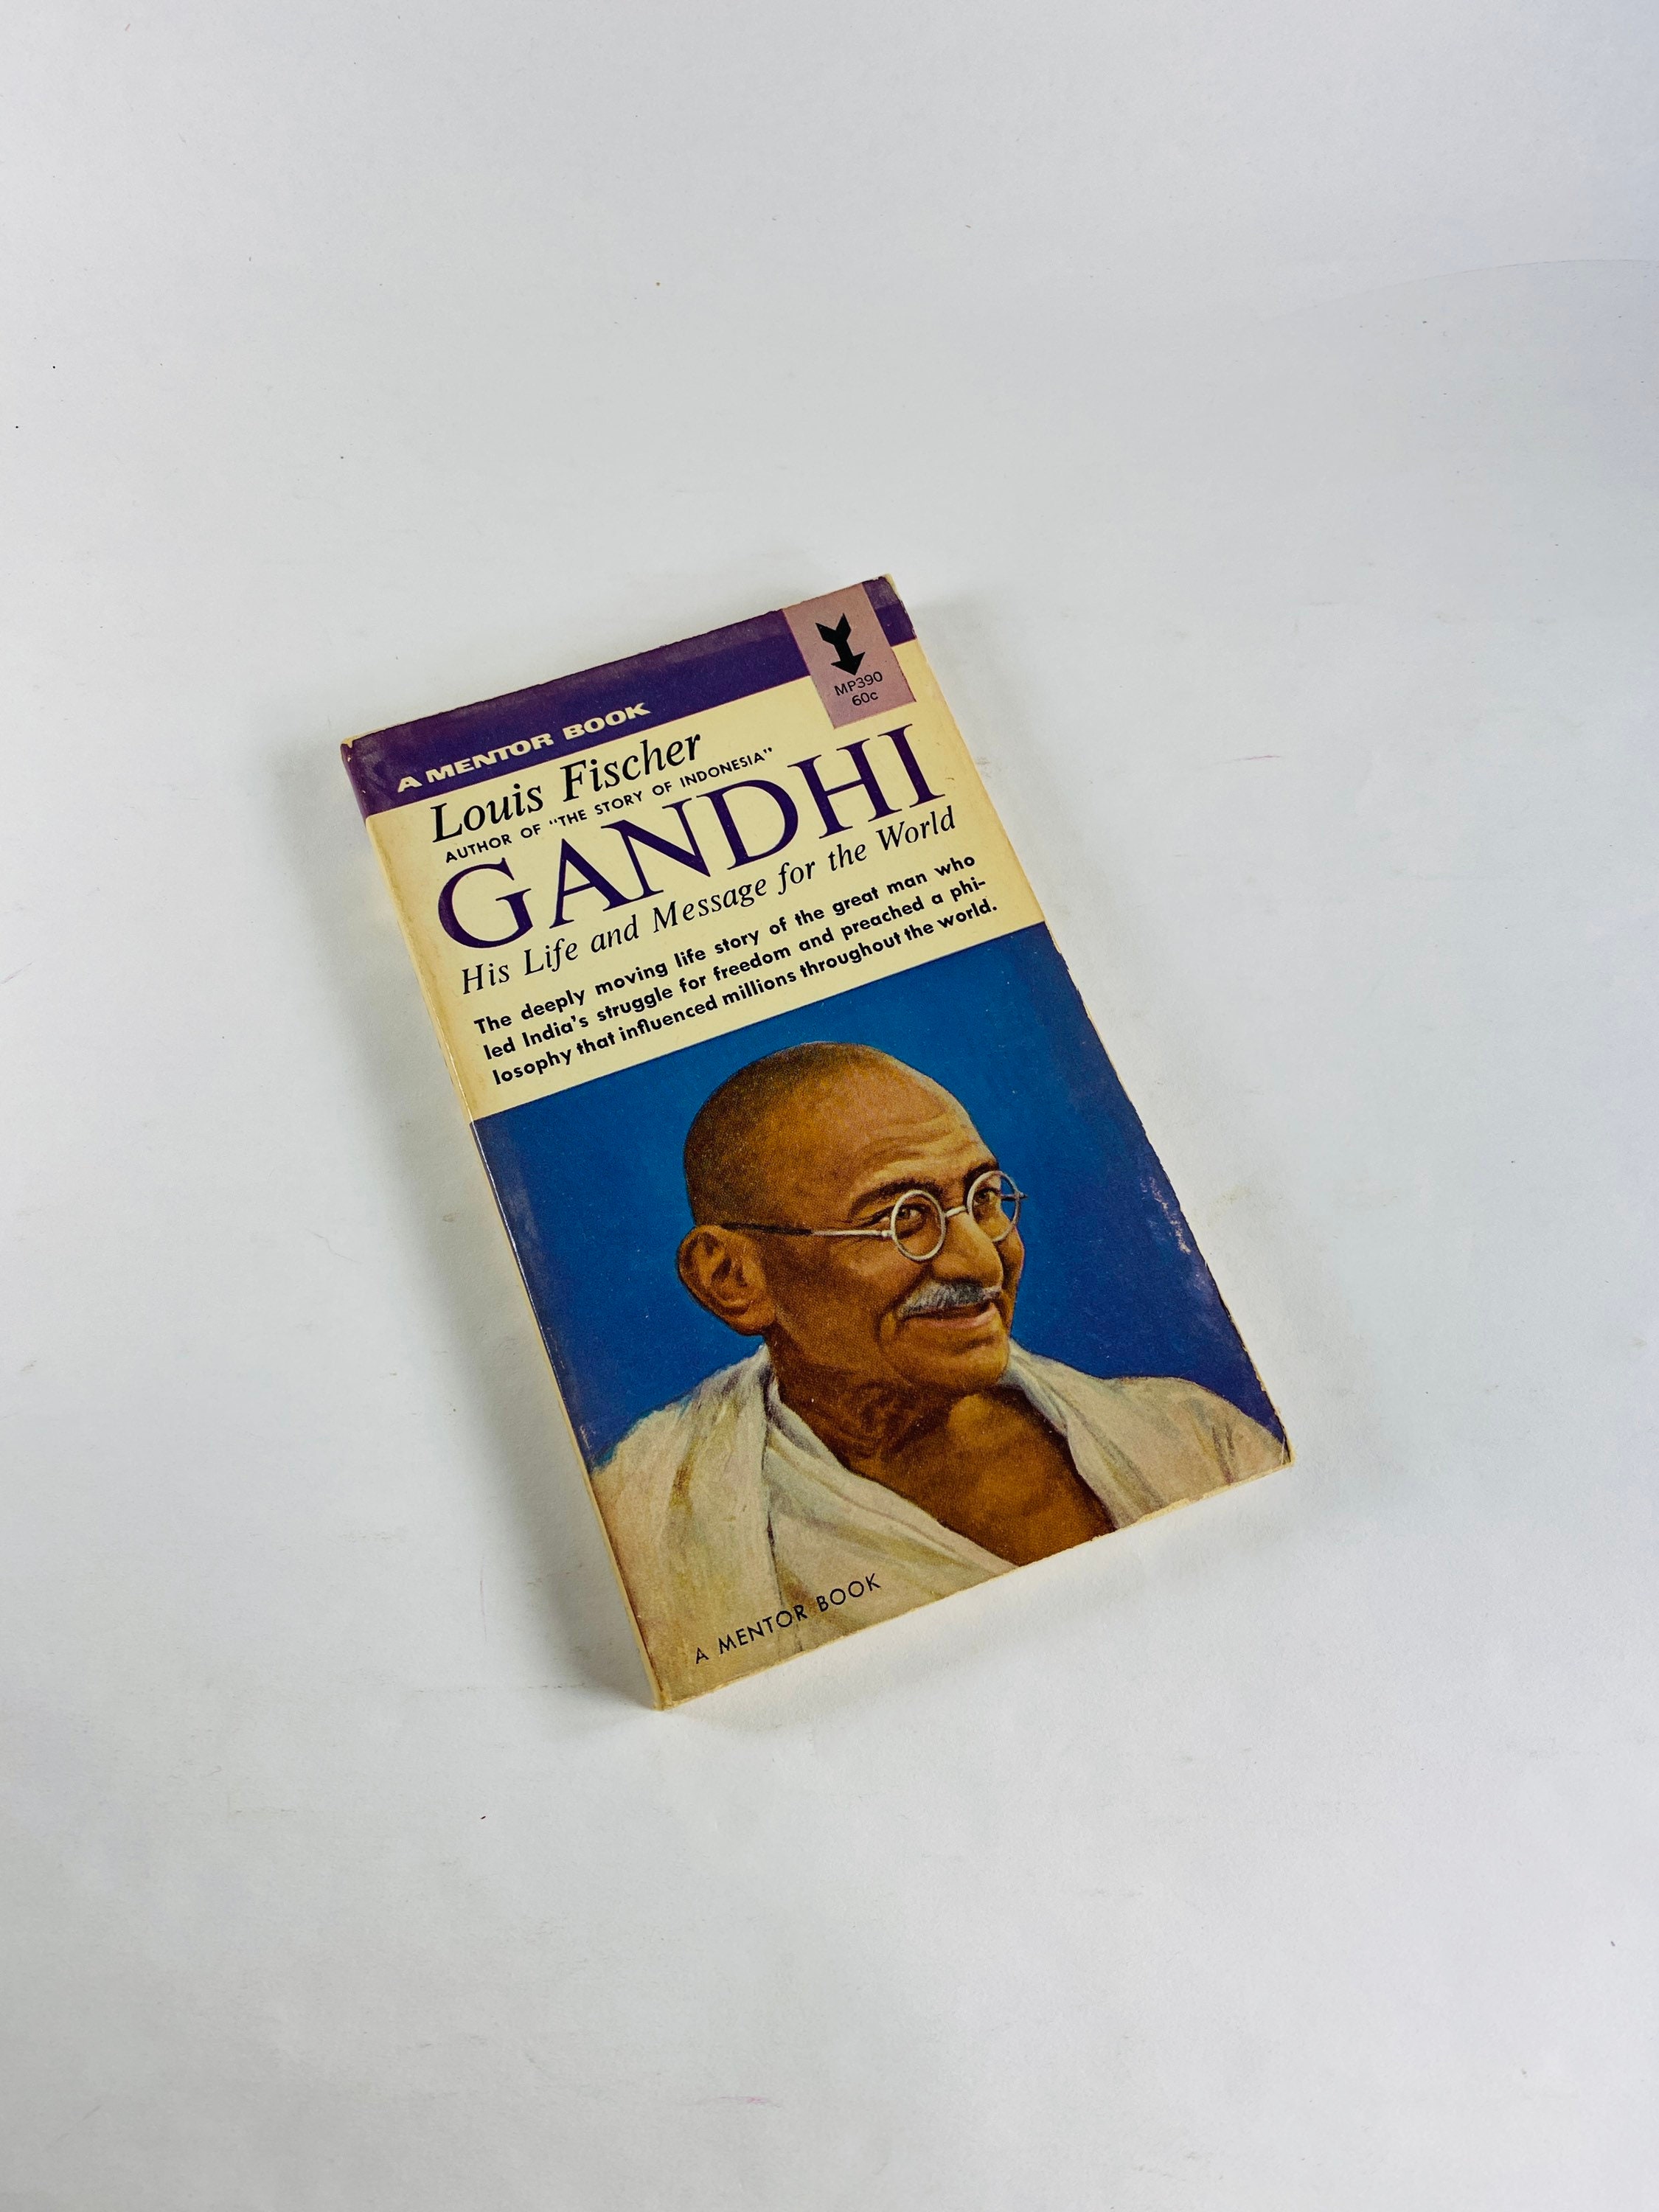 mahatma gandhi book review in english